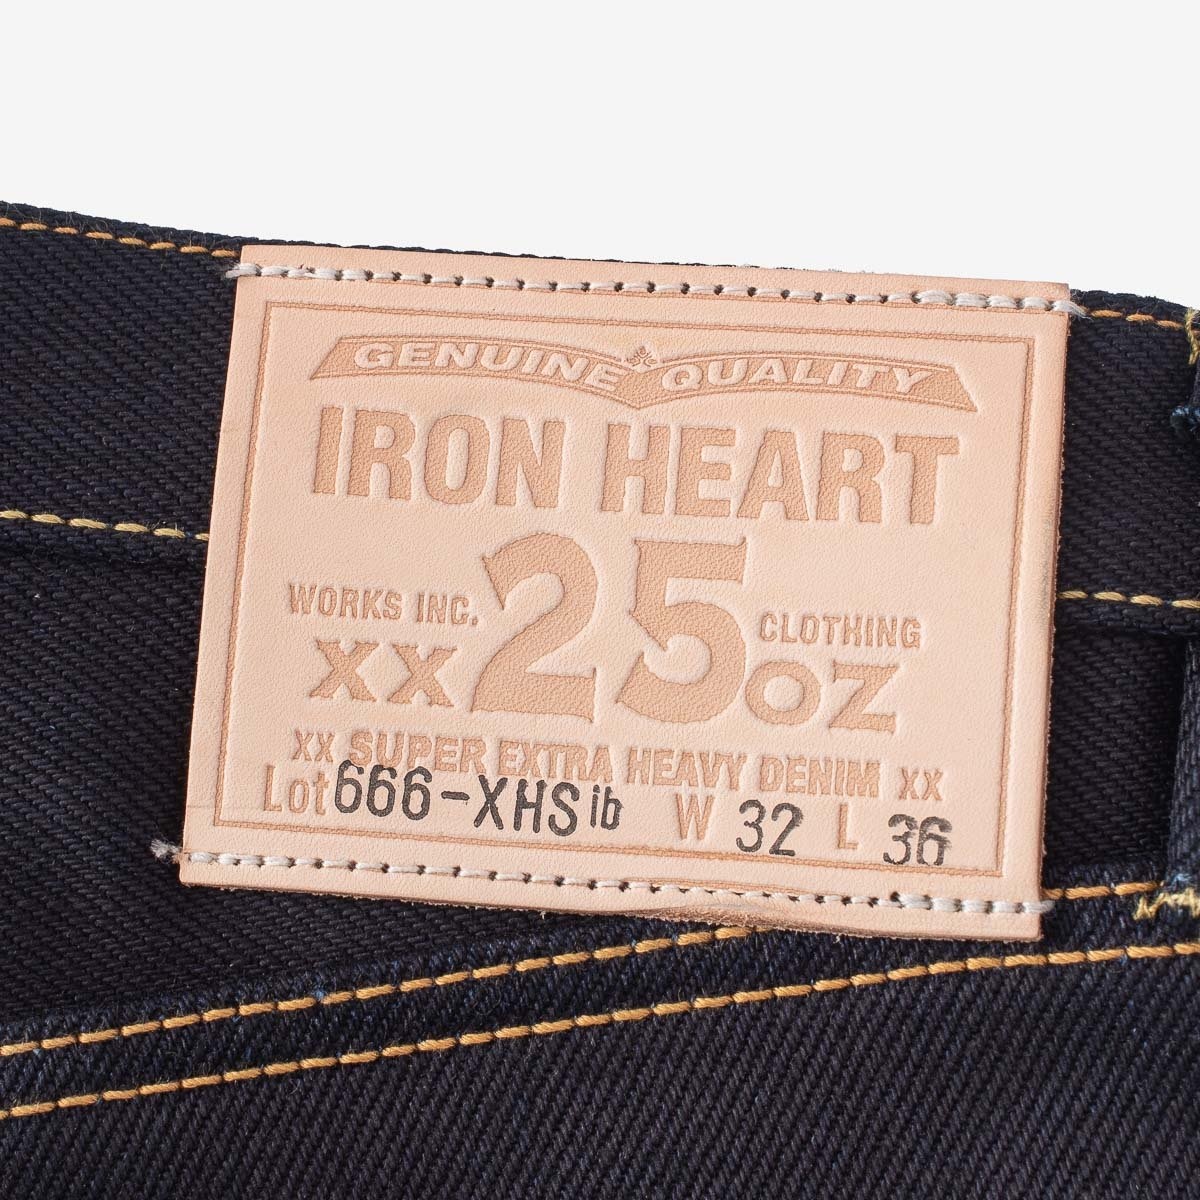 IH-666-XHSib 25oz Selvedge Denim Slim Straight Cut Jeans - Indigo/Black - 10